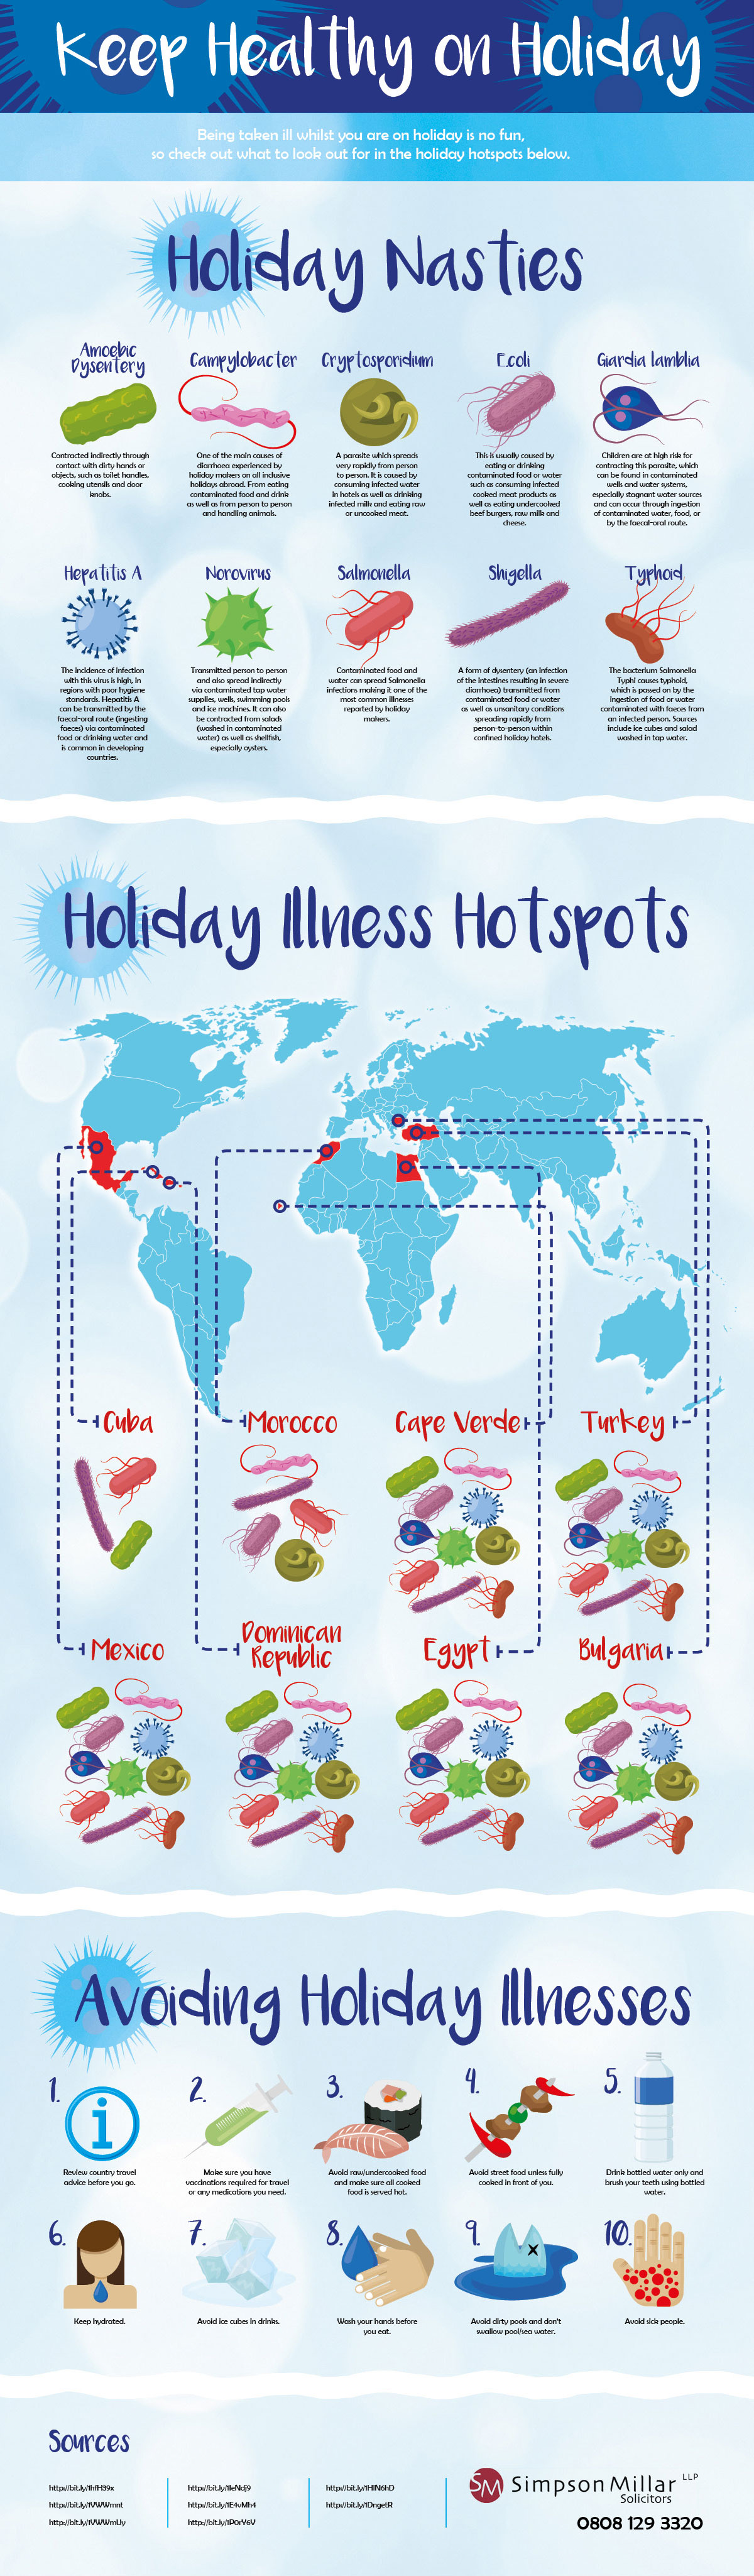 holiday-Illness-infographic